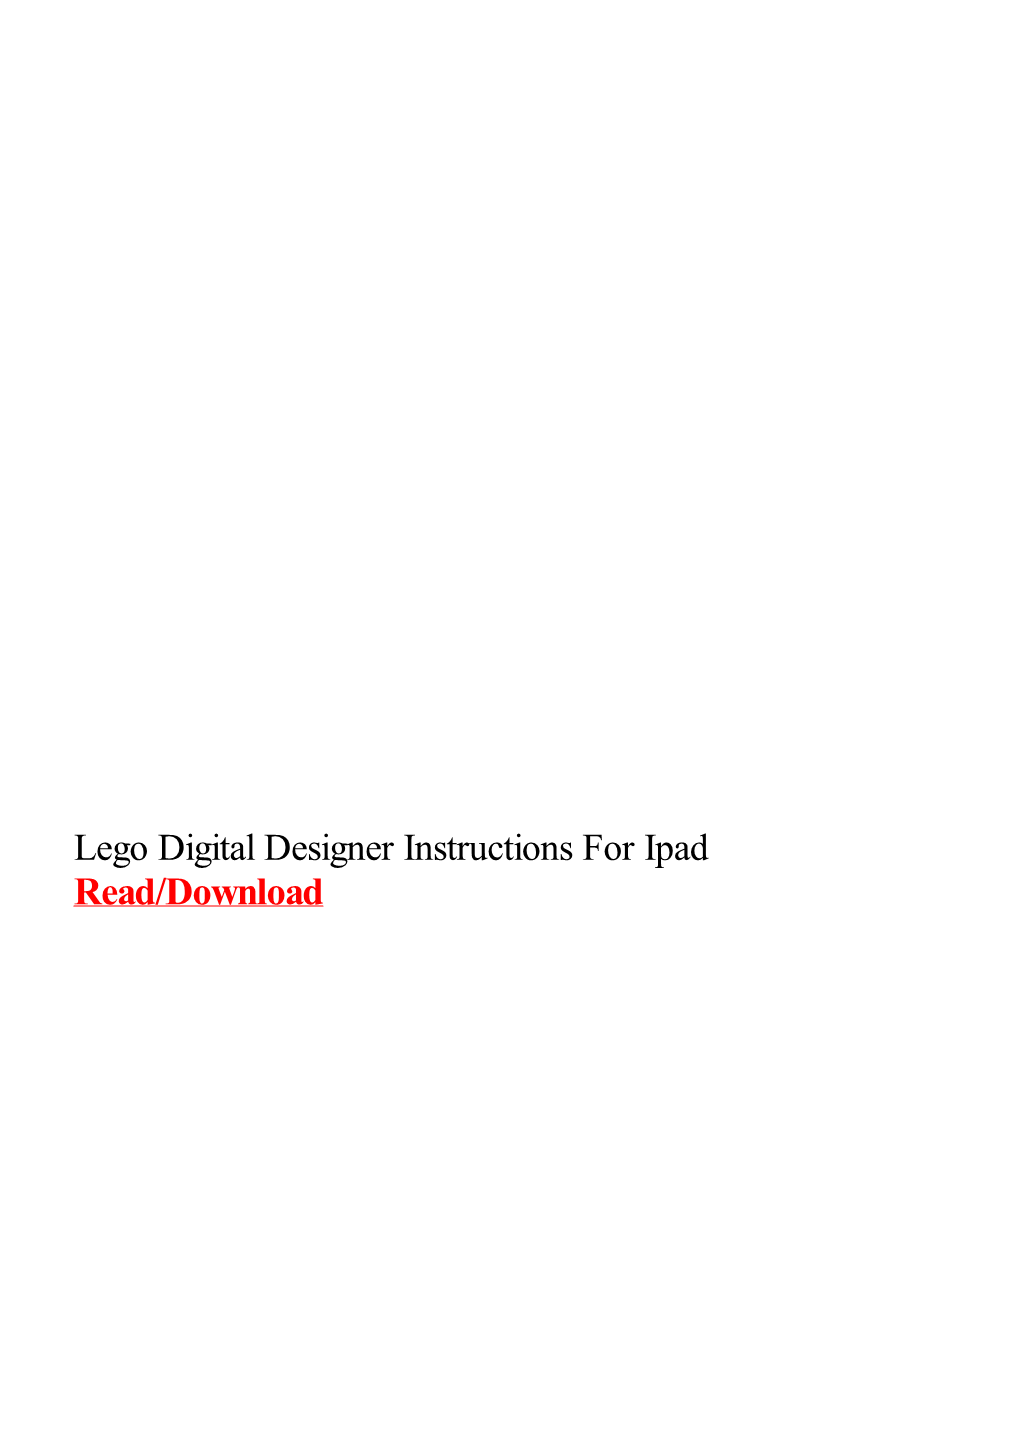 Lego Digital Designer Instructions for Ipad on Ipad+Iphone 58,323